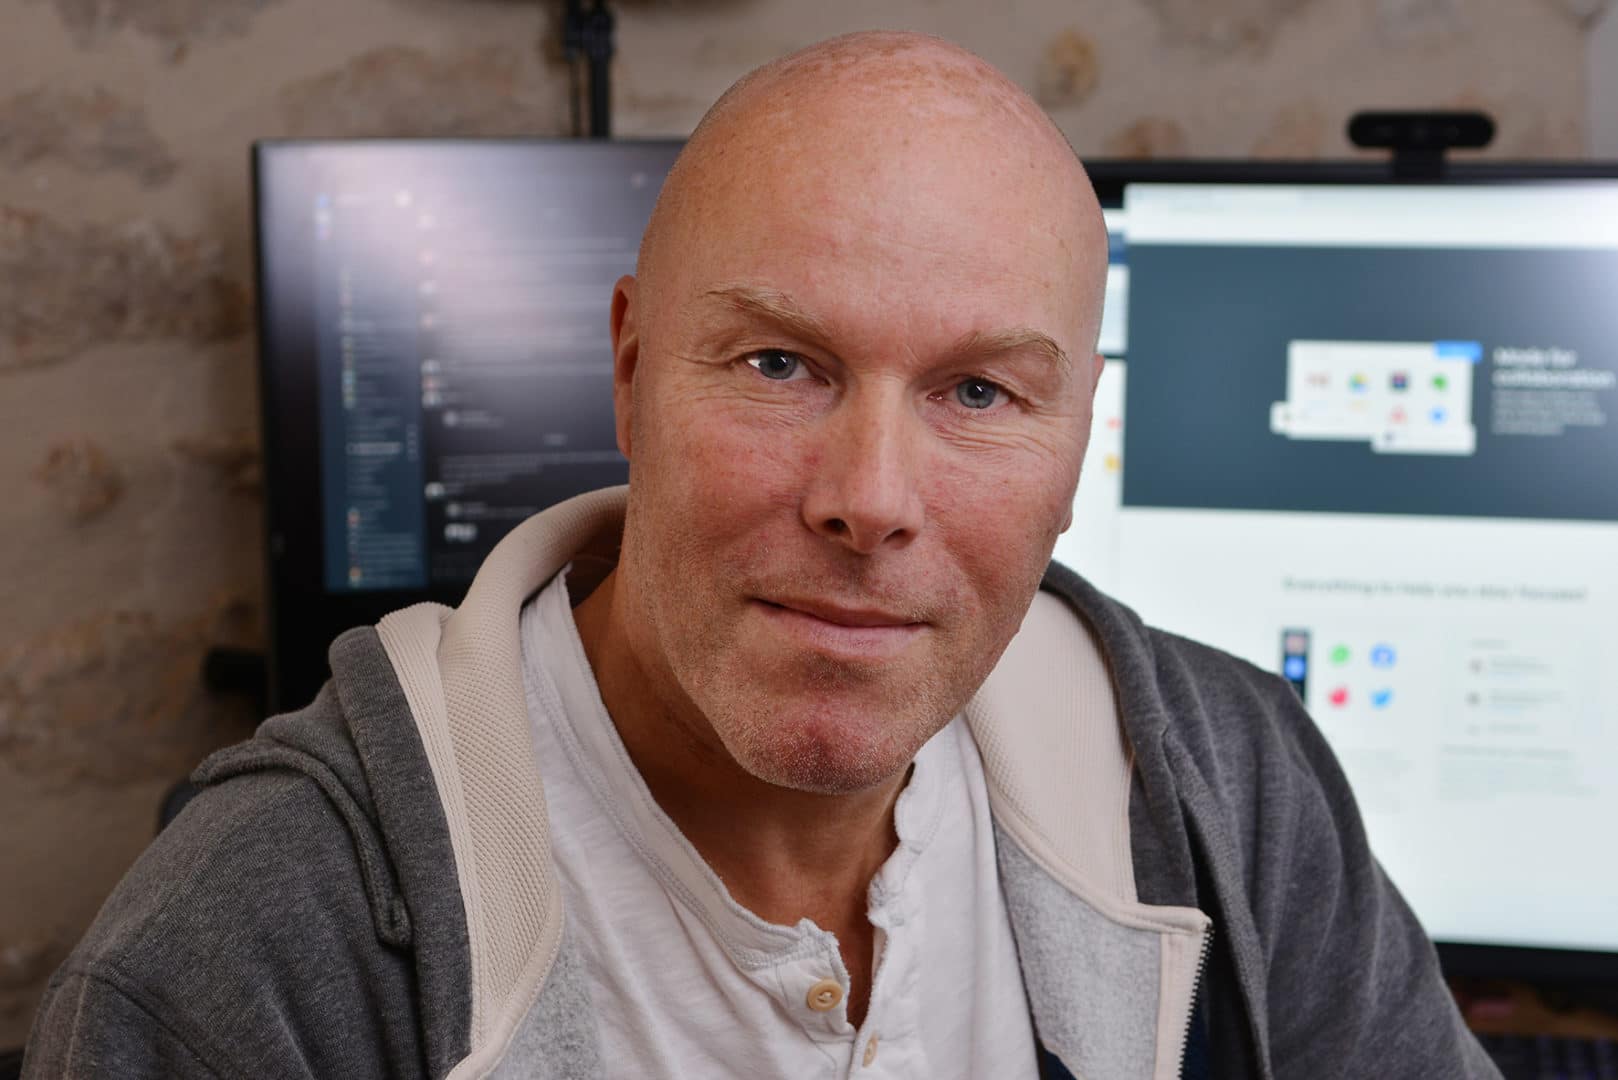 Rolf Larsen, CEO, Chairman and Founder of Desktop.com